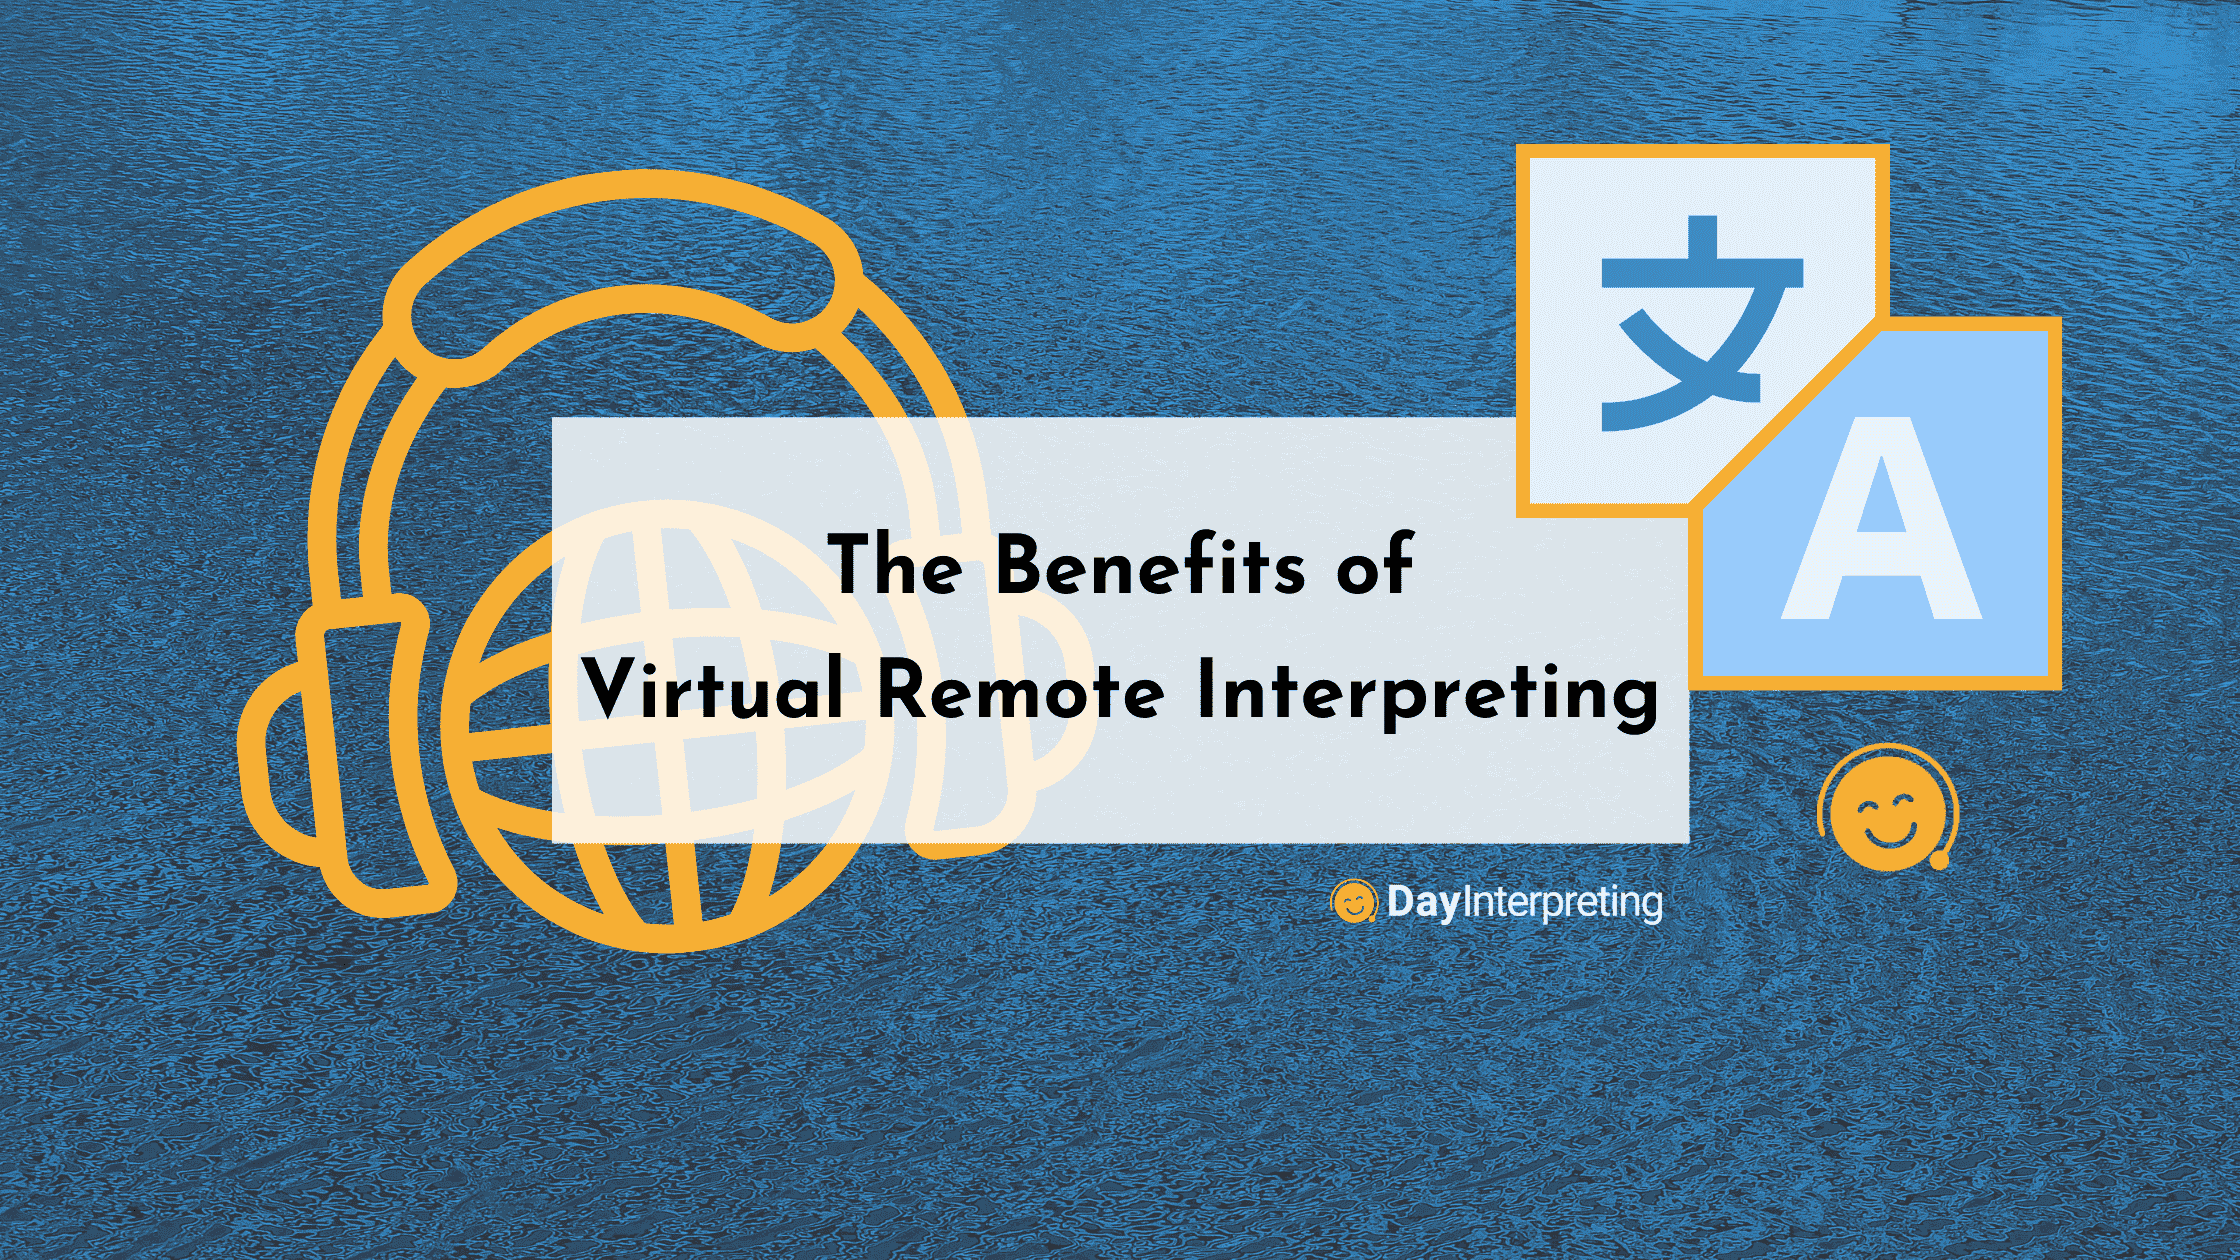 The Benefits of Virtual Remote Interpreting